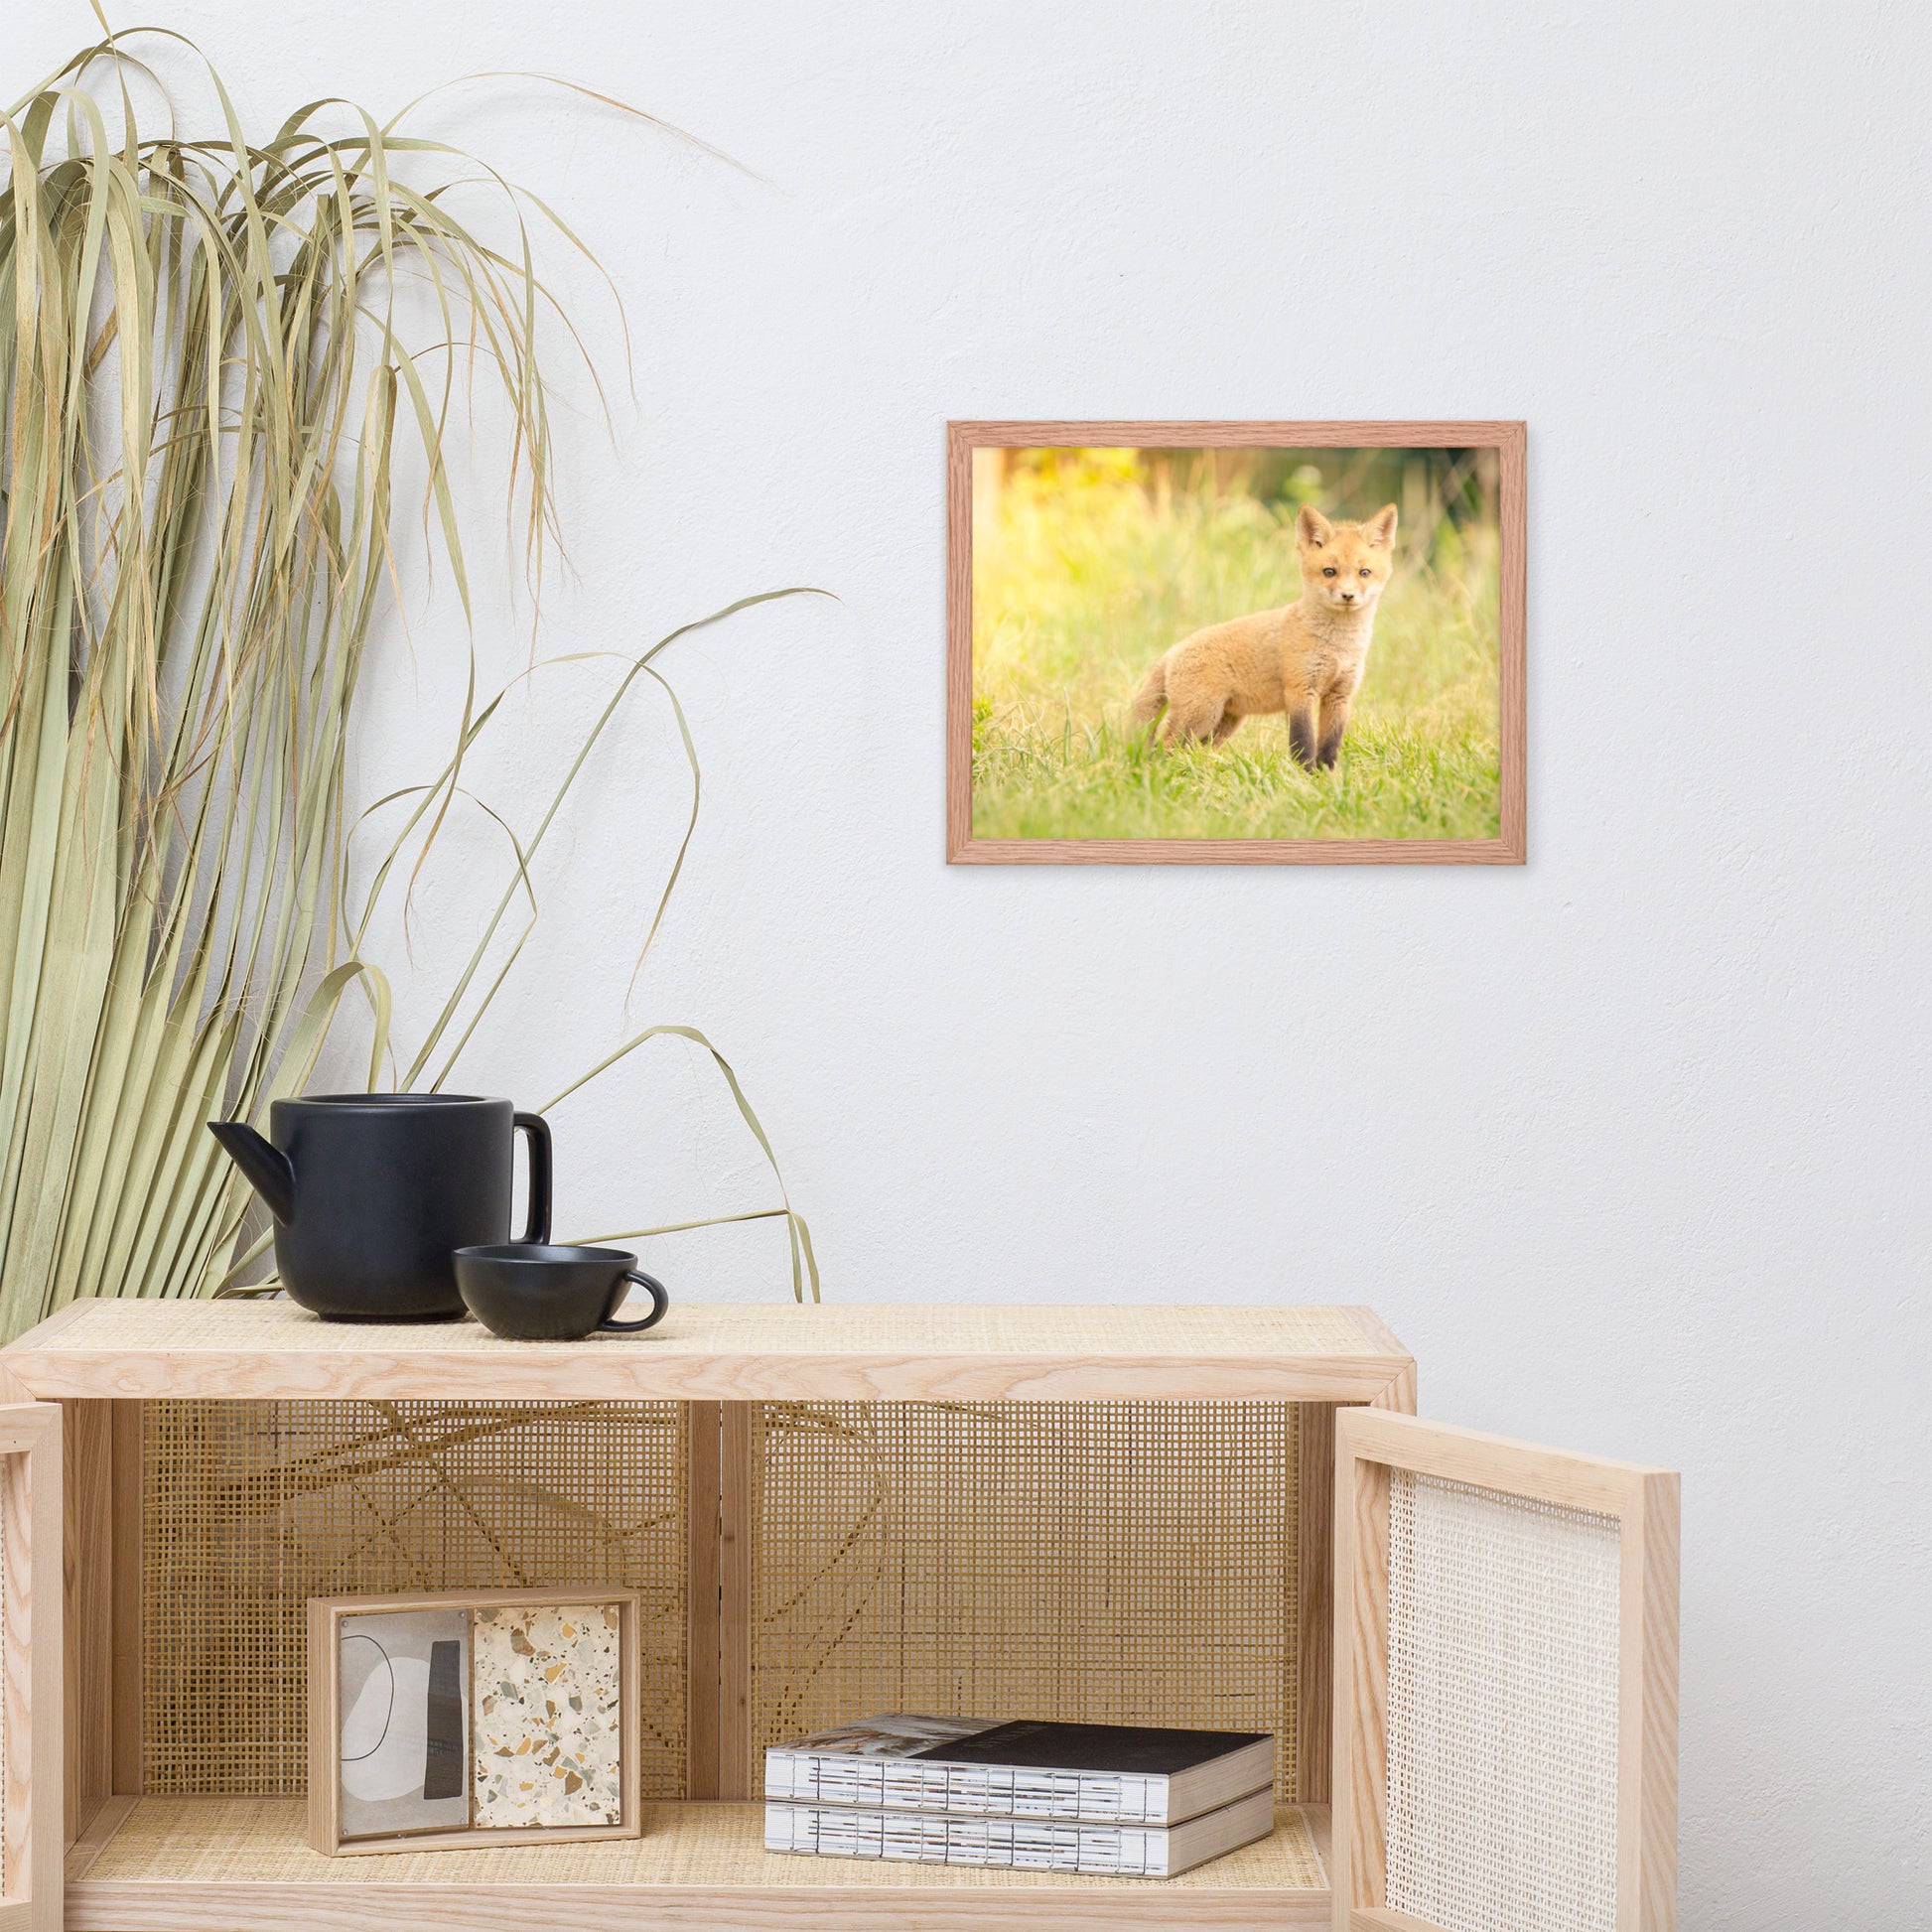 Wall Frames For Nursery: Baby Red Fox in the Sun - Animal / Wildlife / Nature Artwork - Wall Decor - Framed Wall Art Print